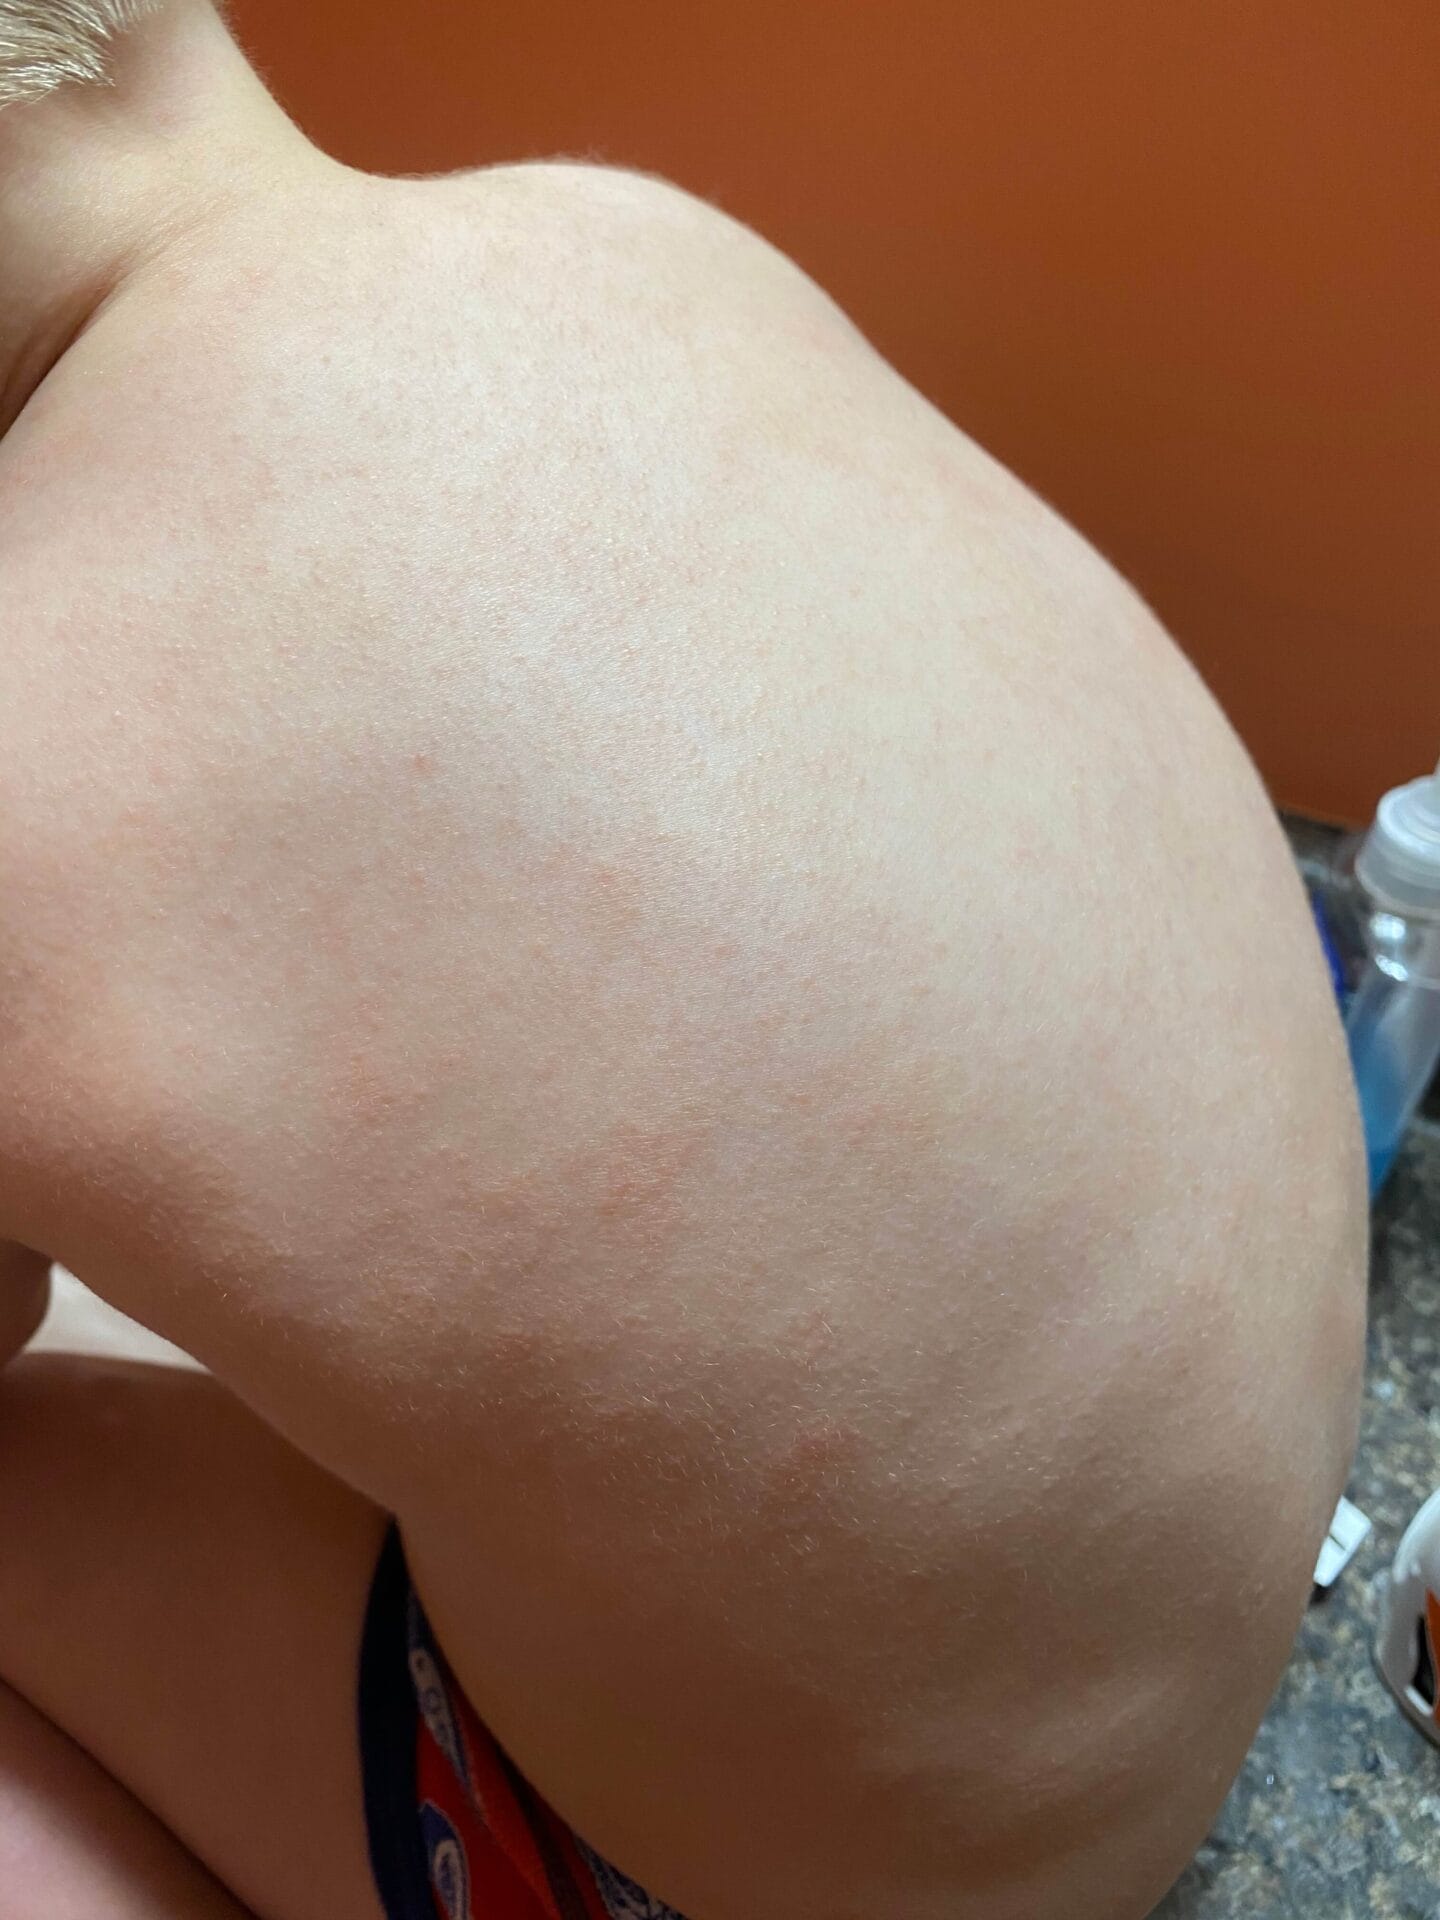 toddler skin rash - eczema